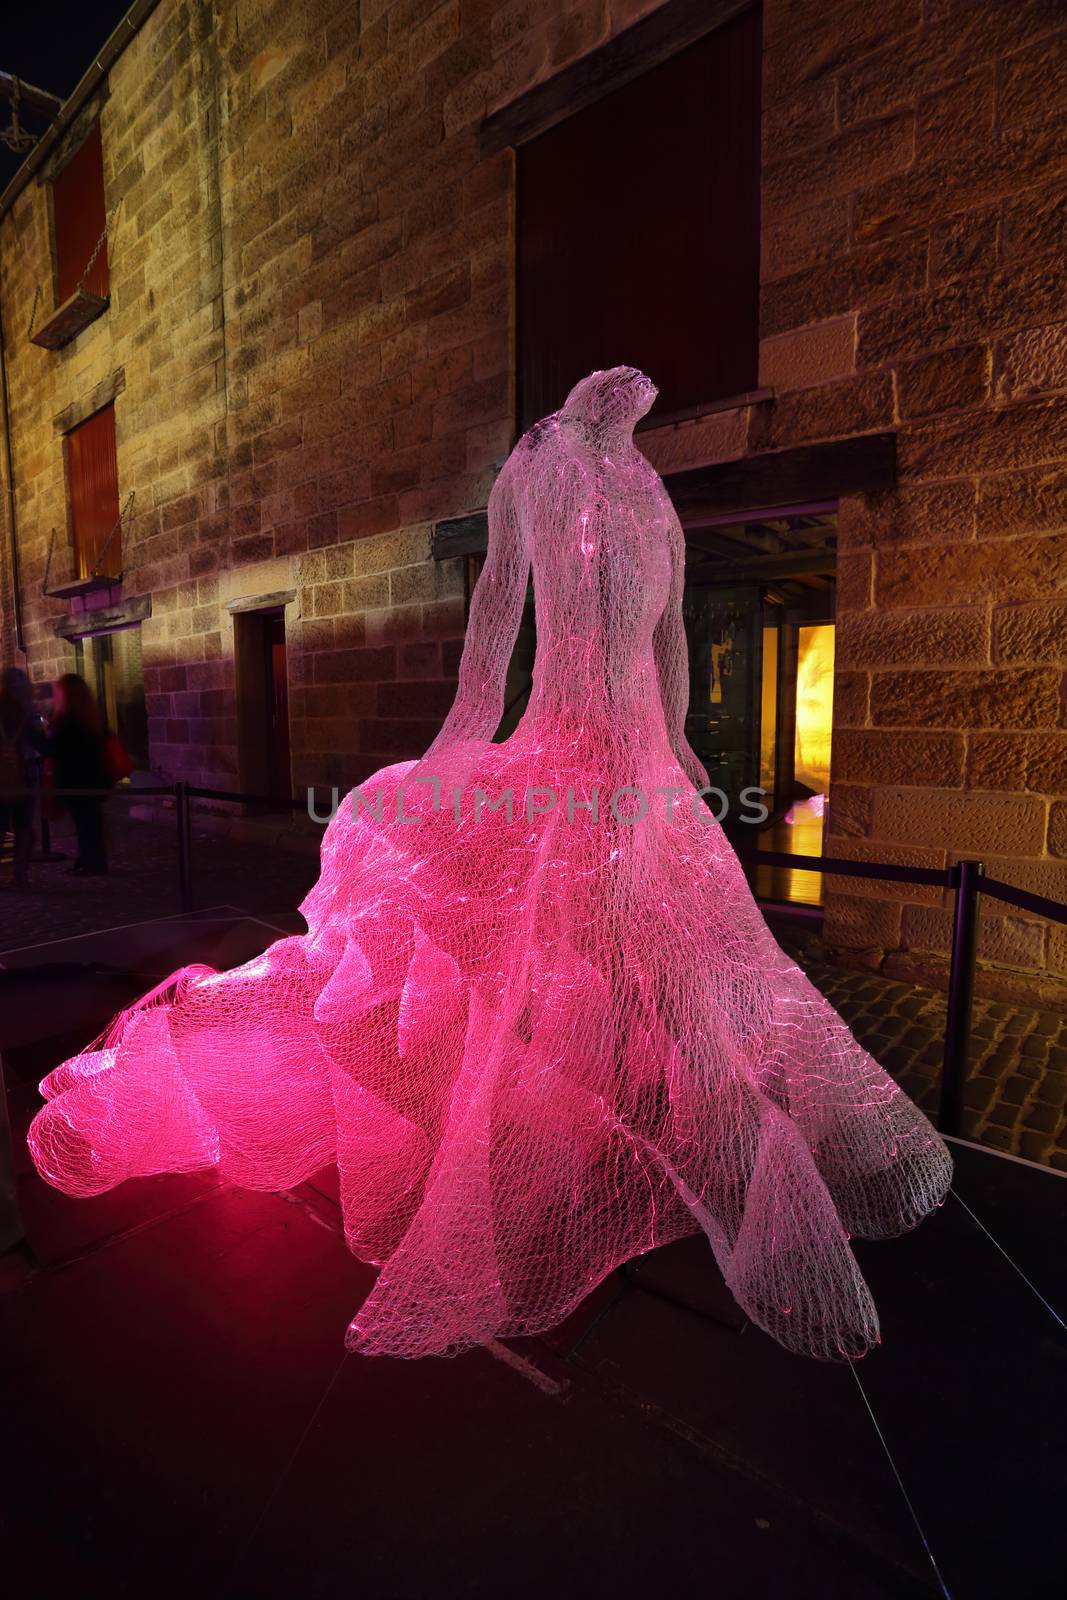 The Dresses fibre optic The Rocks at Vivid Sydney by lovleah